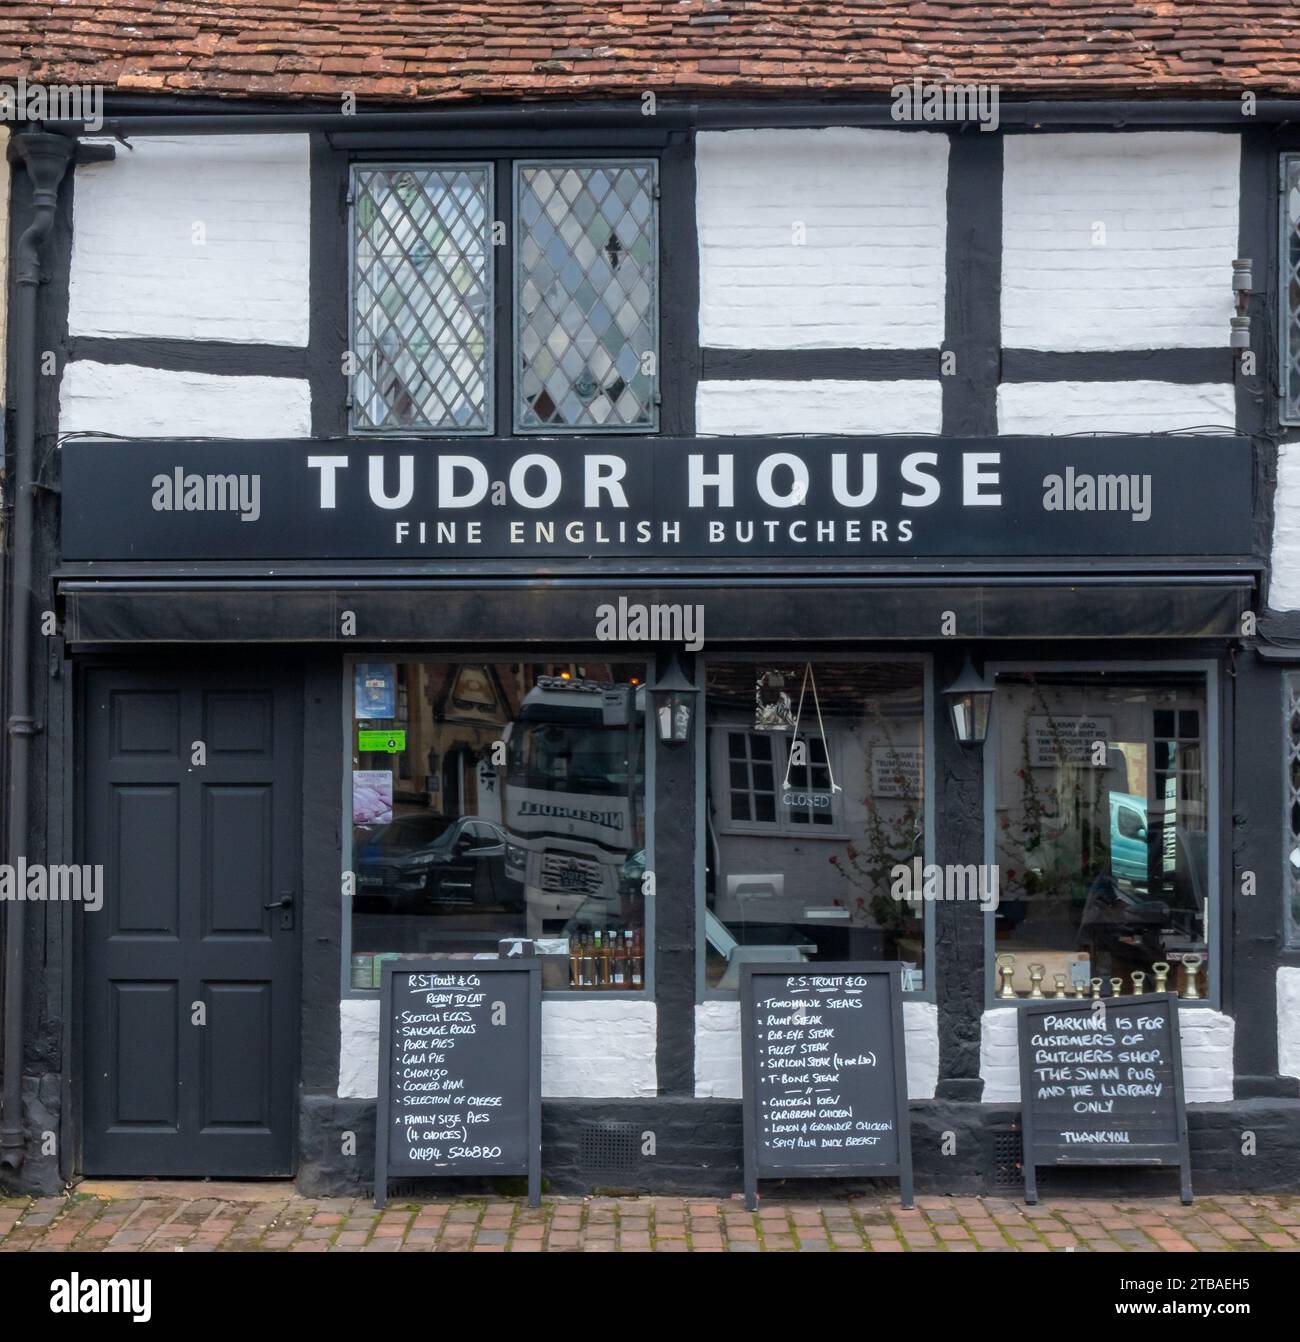 Tudor House, boucheries anglaises fines, West Wycombe, Buckinghamshire, Angleterre, ROYAUME-UNI Banque D'Images